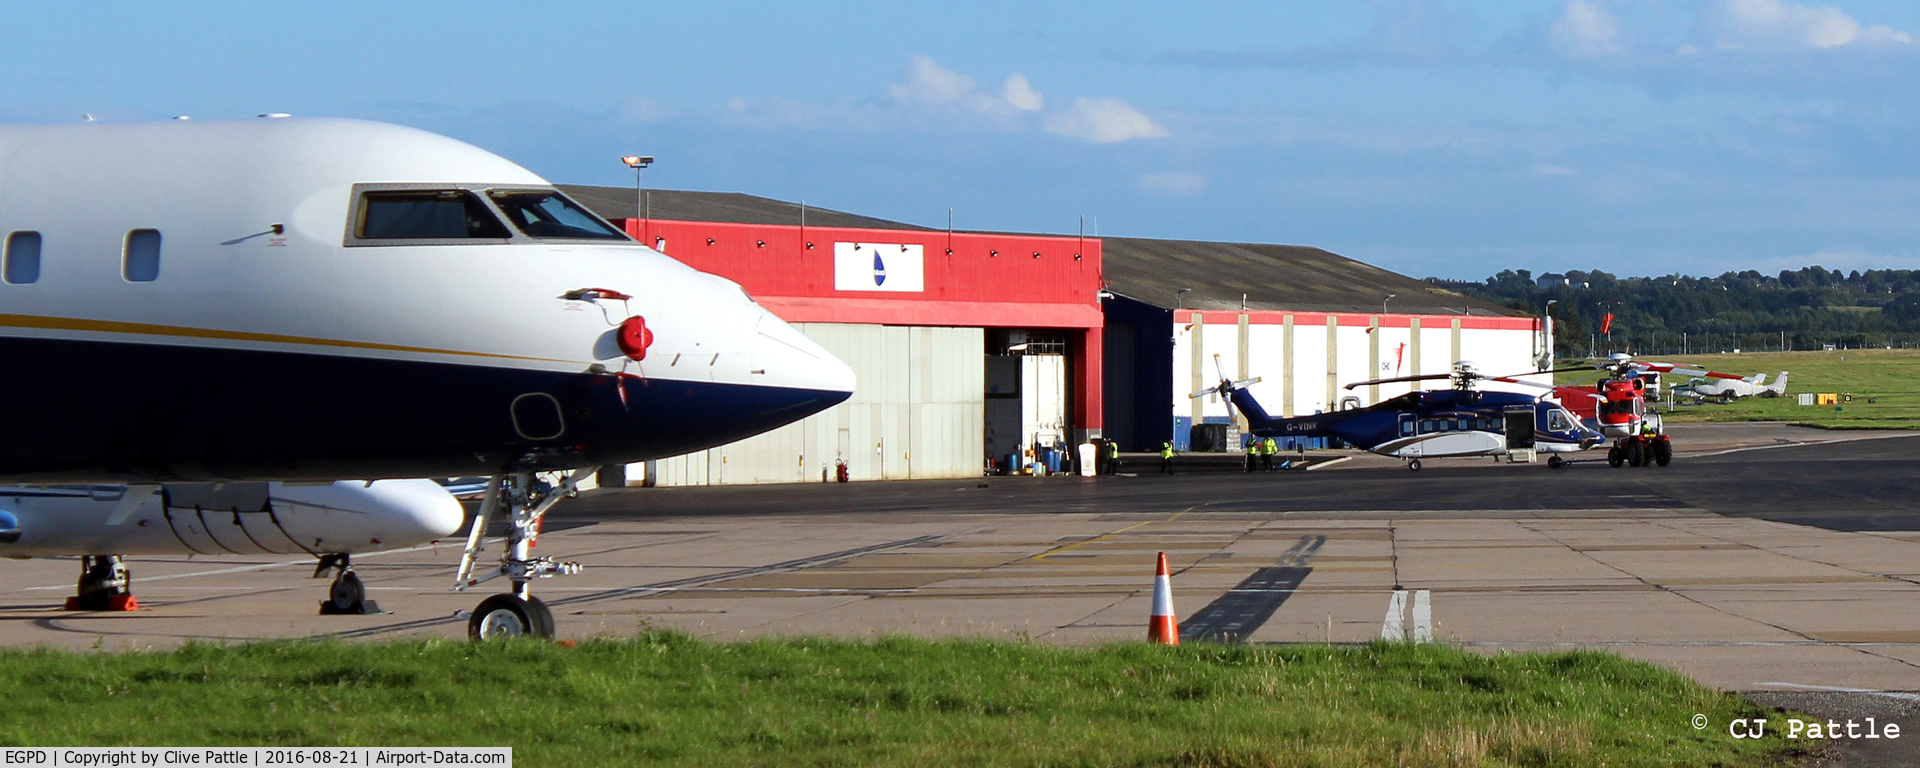 Aberdeen Airport, Aberdeen, Scotland United Kingdom (EGPD) - Aberdeen EGPD East side apron